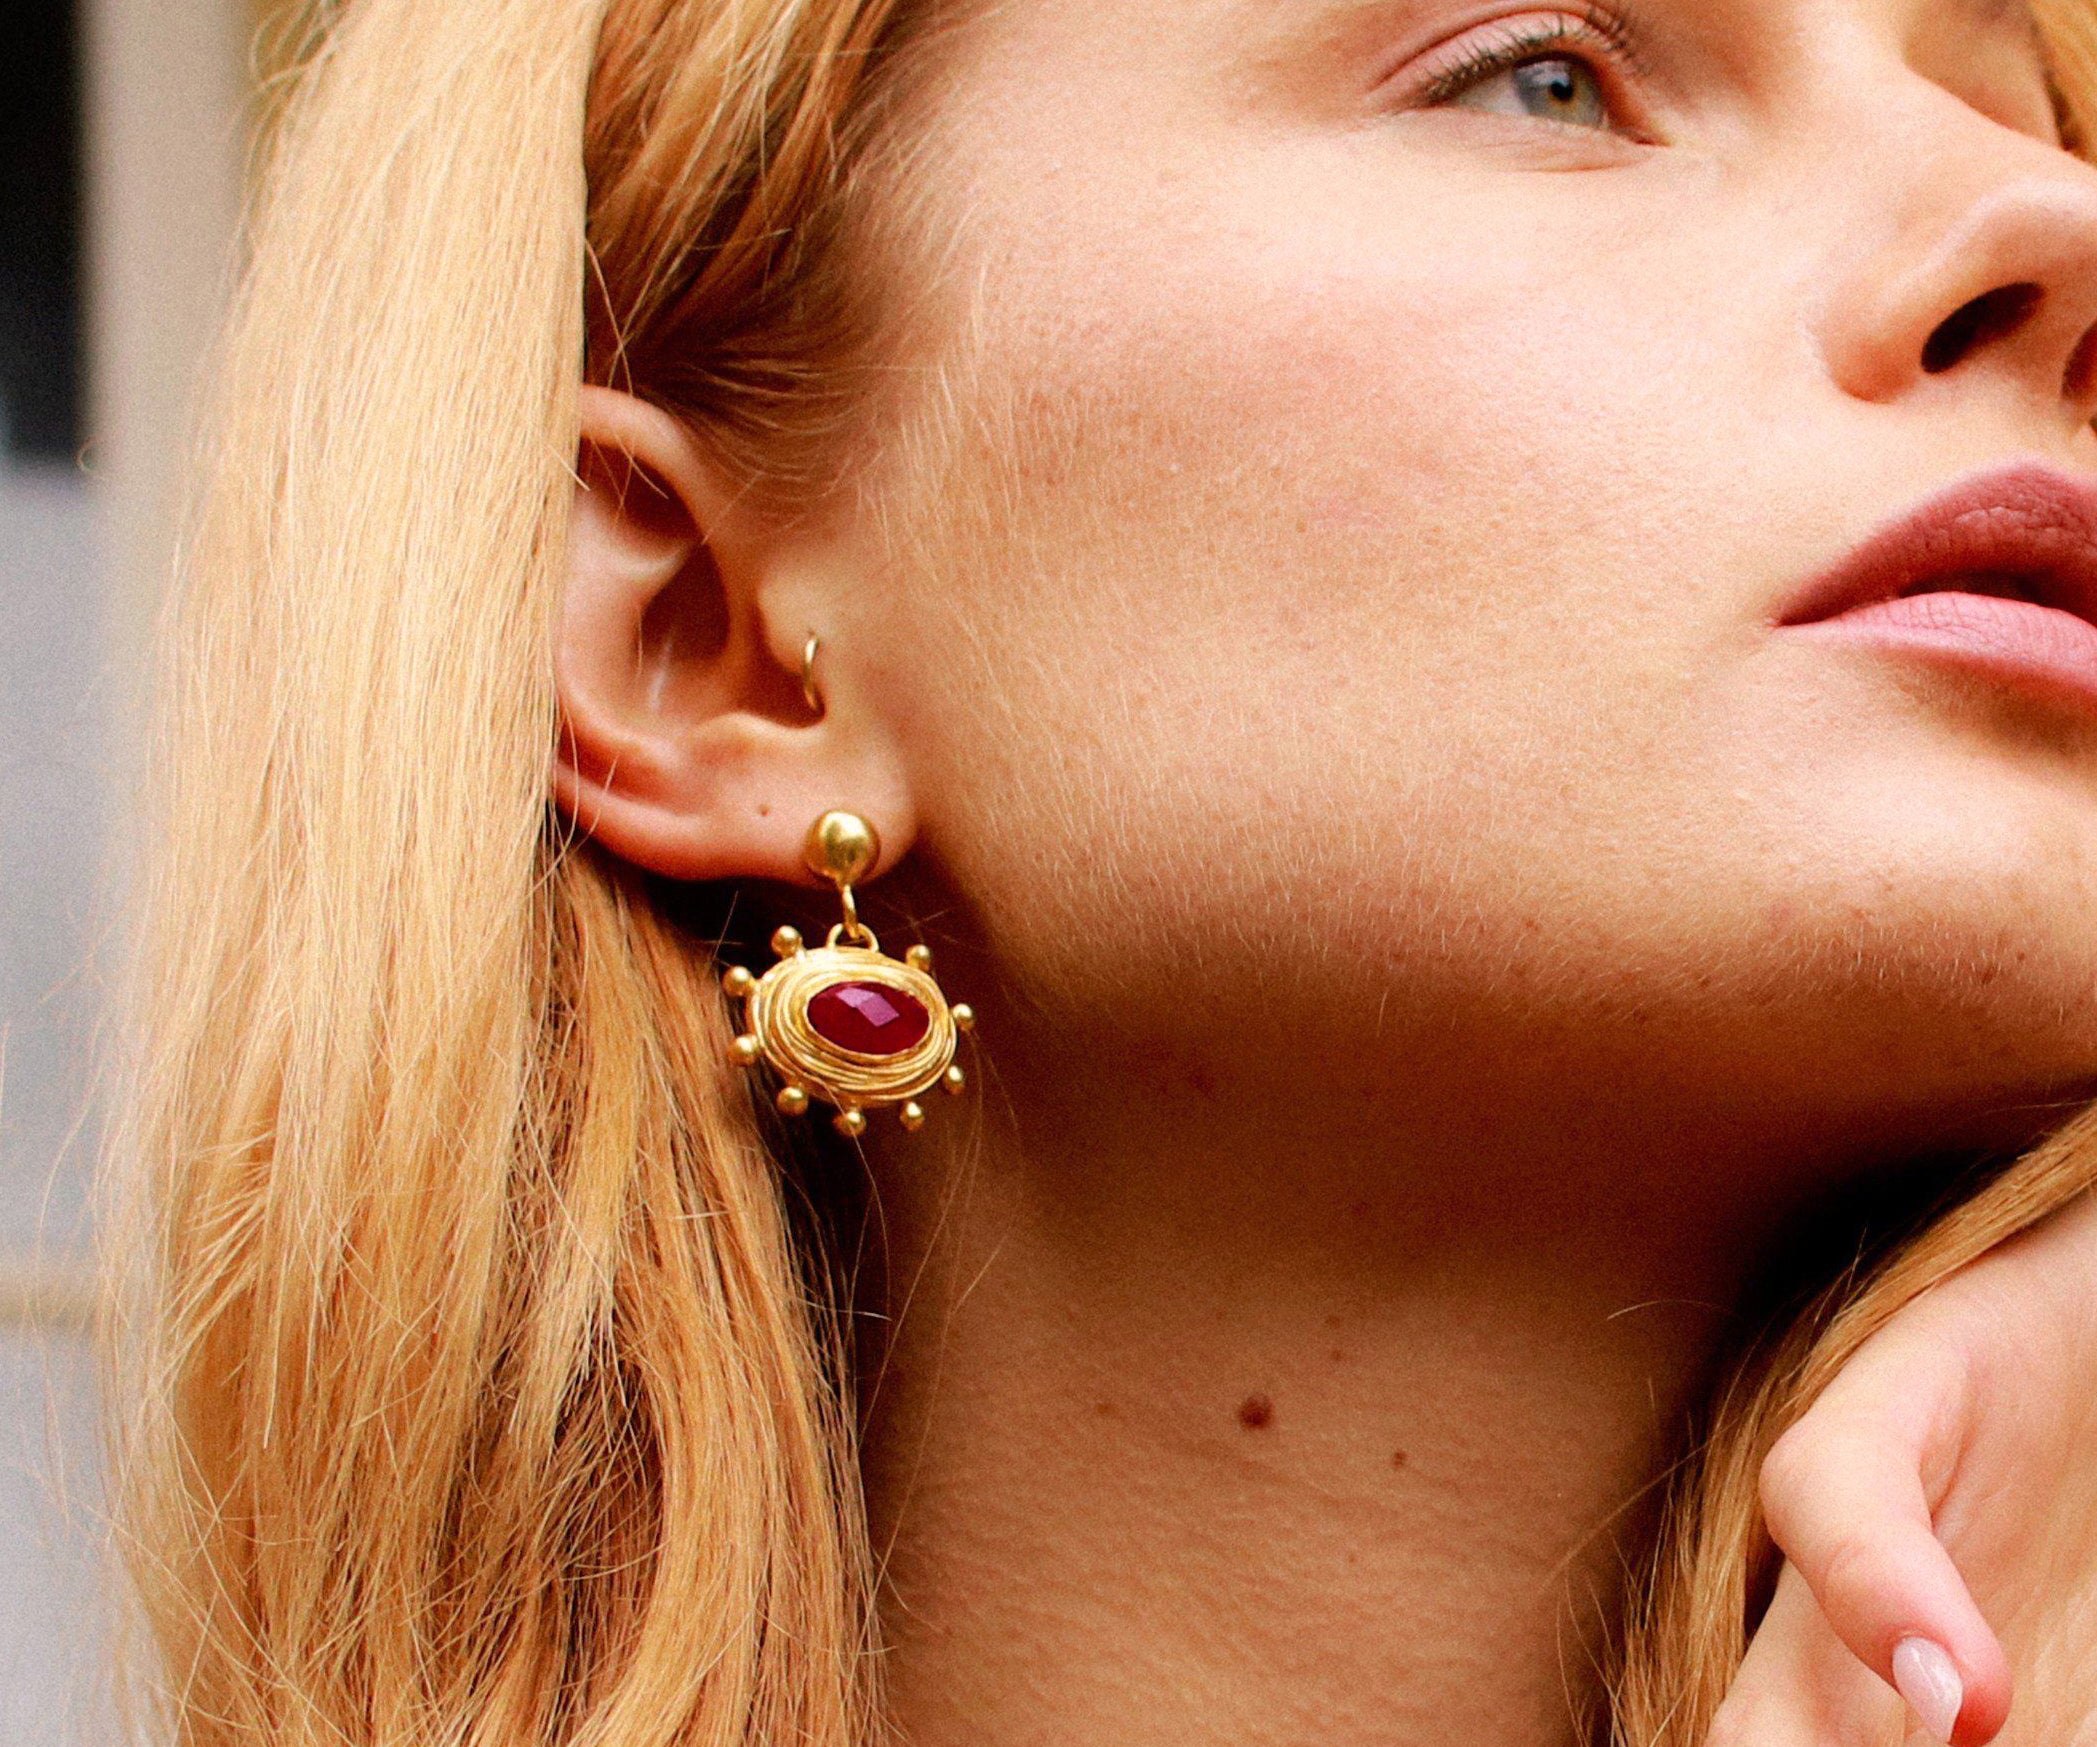 Zand Ruby Drop Earrings | Sustainable Jewellery by Ottoman Hands